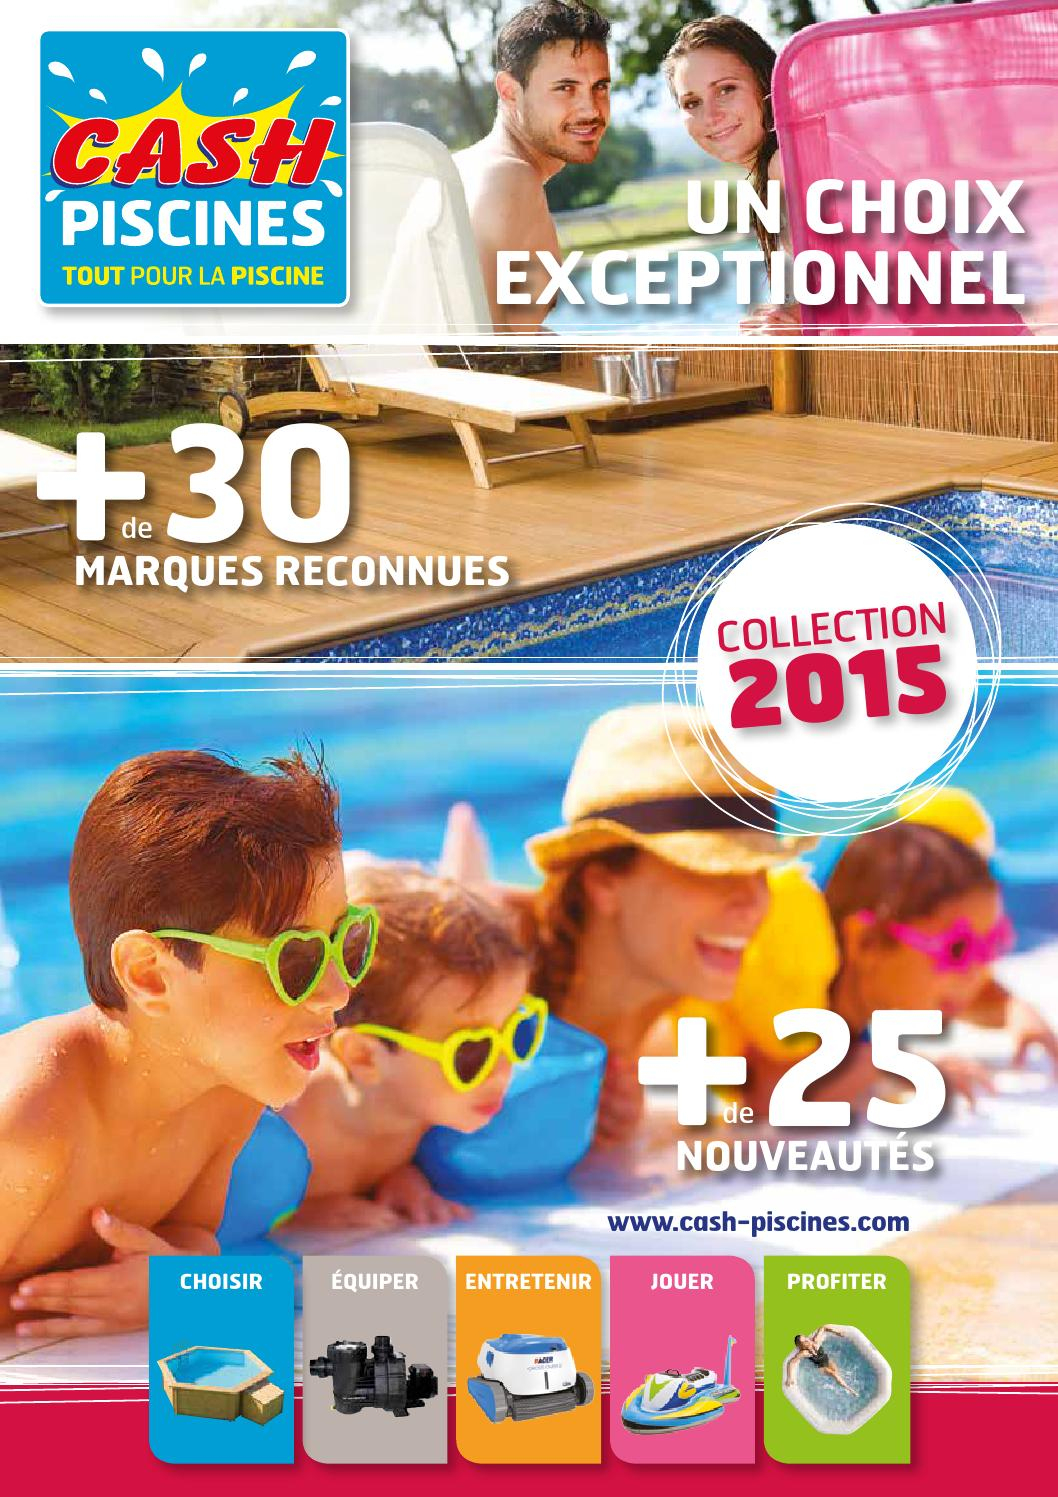 Catalogue Cash Piscines 2015 By Octave Octave - Issuu concernant Cash Piscine Pierrelatte